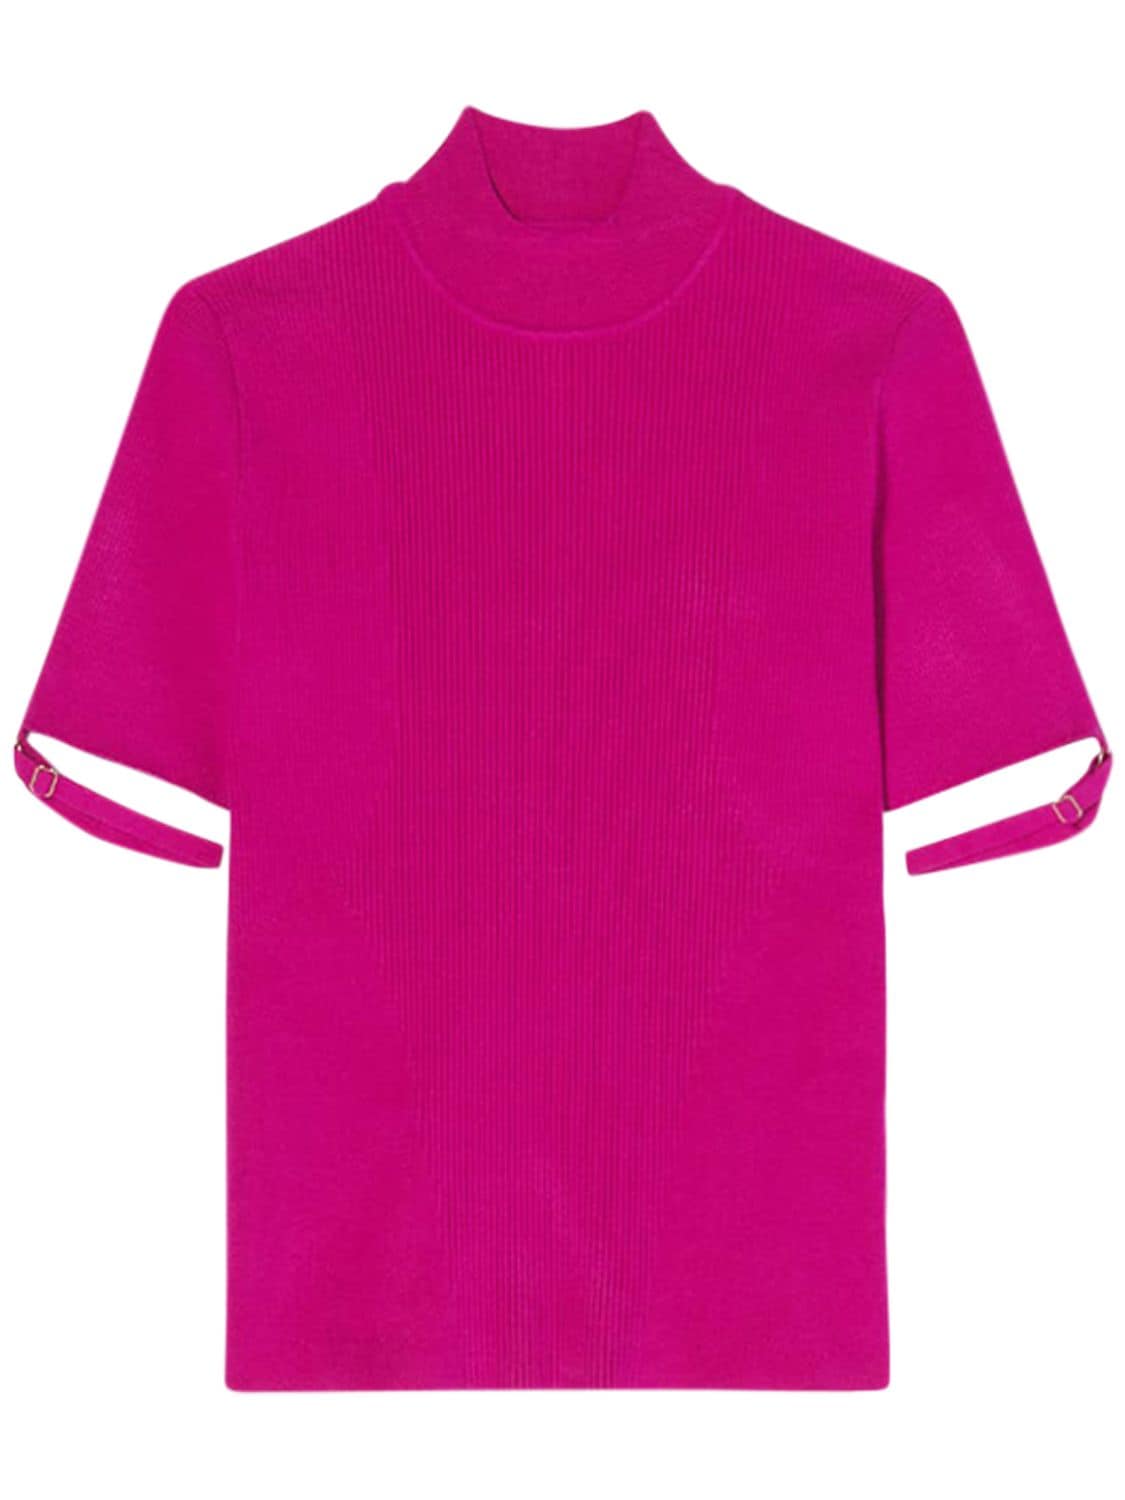 JACQUEMUS “TORRE”粘胶纤维混纺罗纹针织短款上衣,74I5KX155-UELOSW2